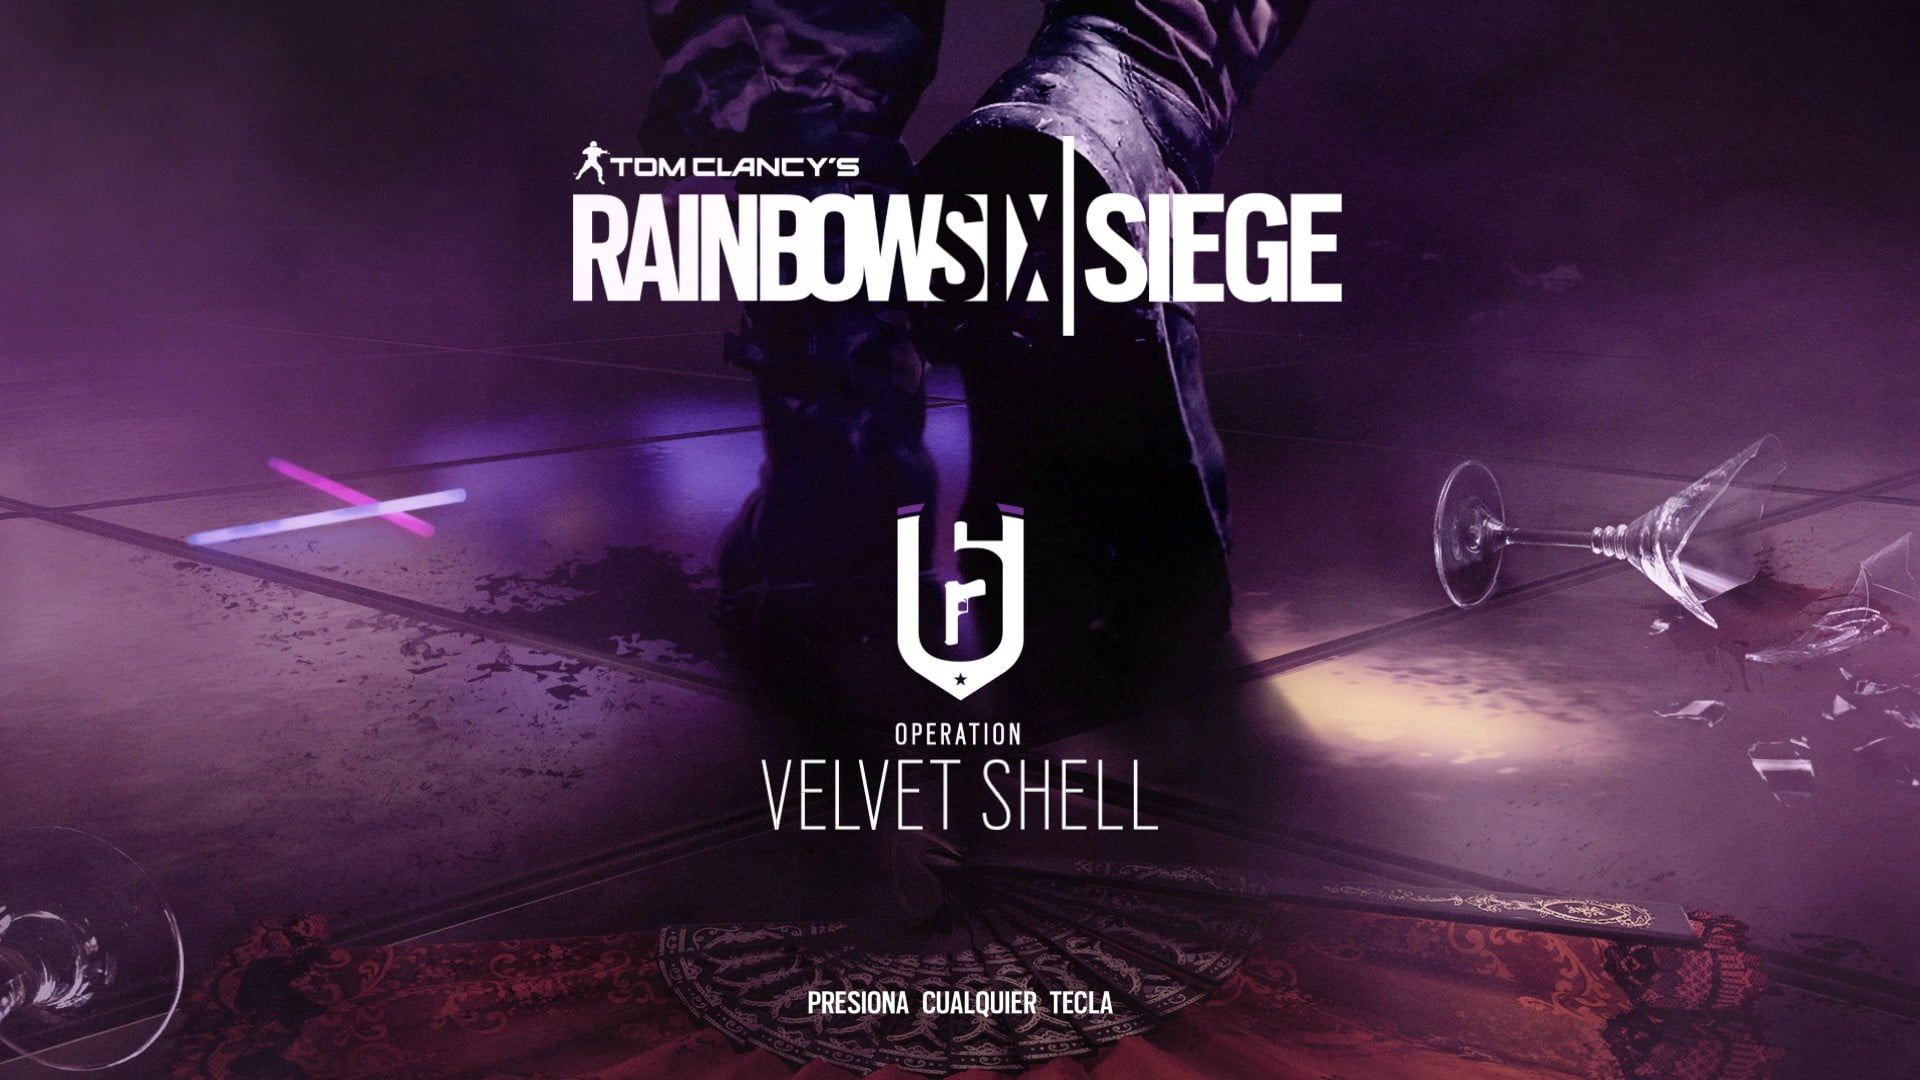 Tom Clancy's Rainbowsix Siege cover